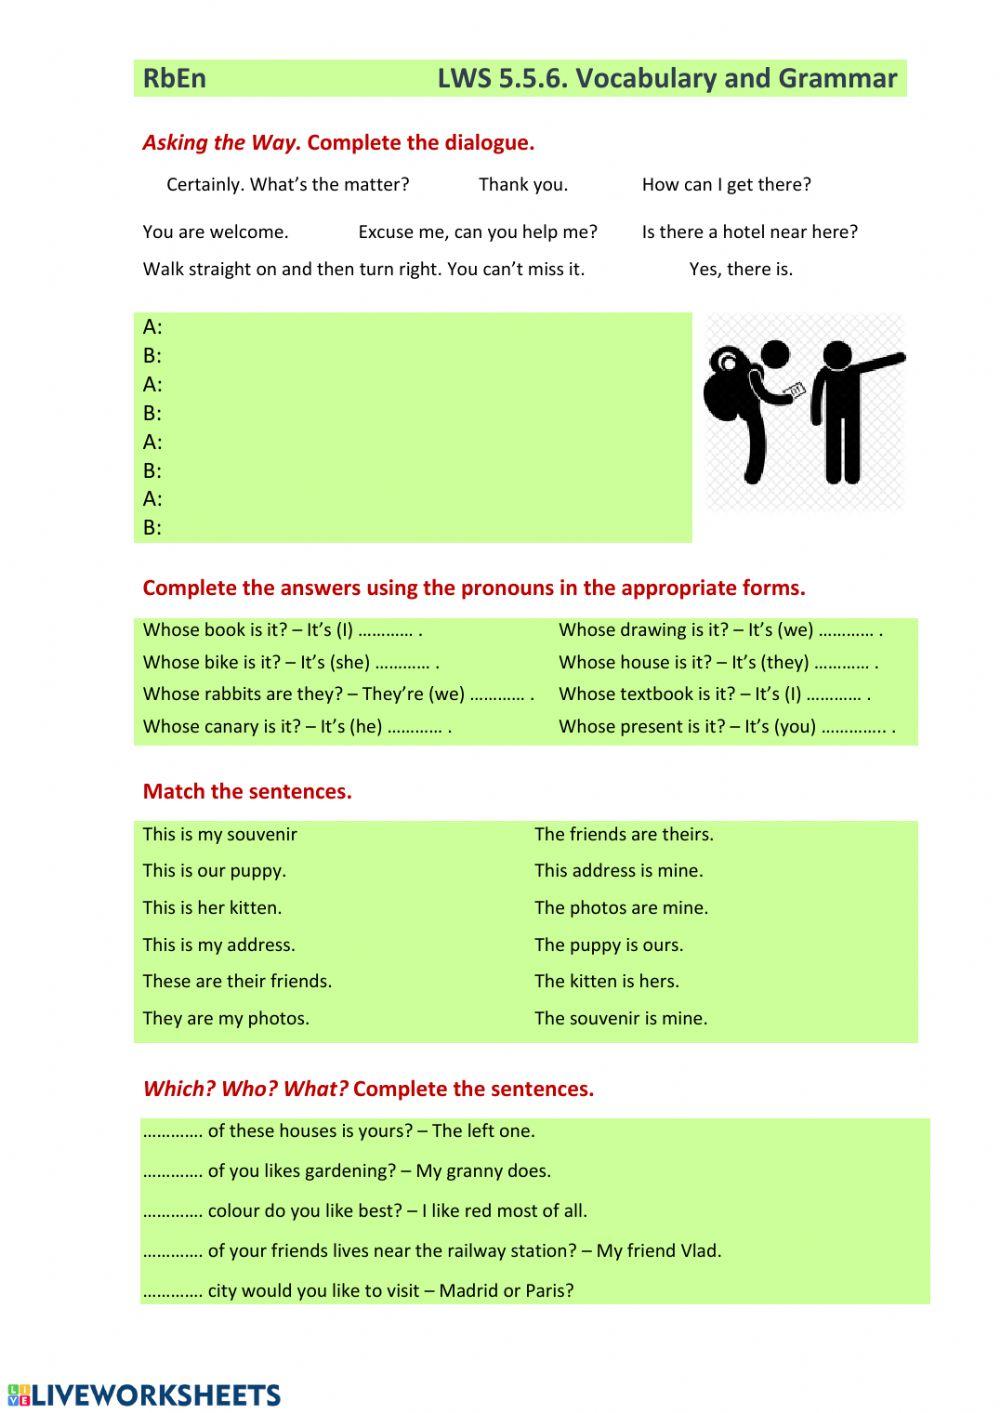 RbEn 5-LWS-5.6-Vocabulary and Grammar